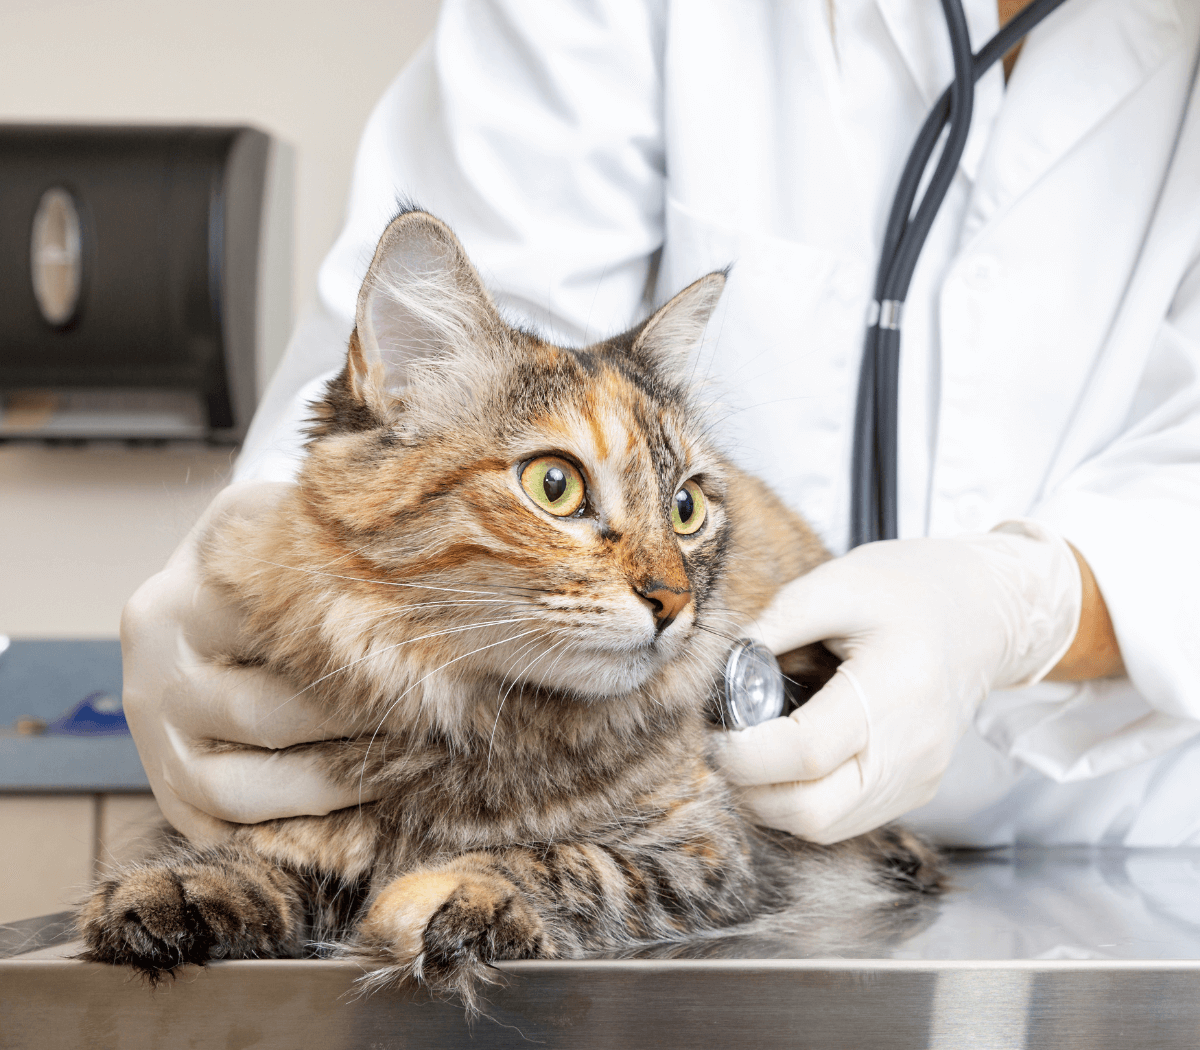 Veterinarian holding a cat and examining him